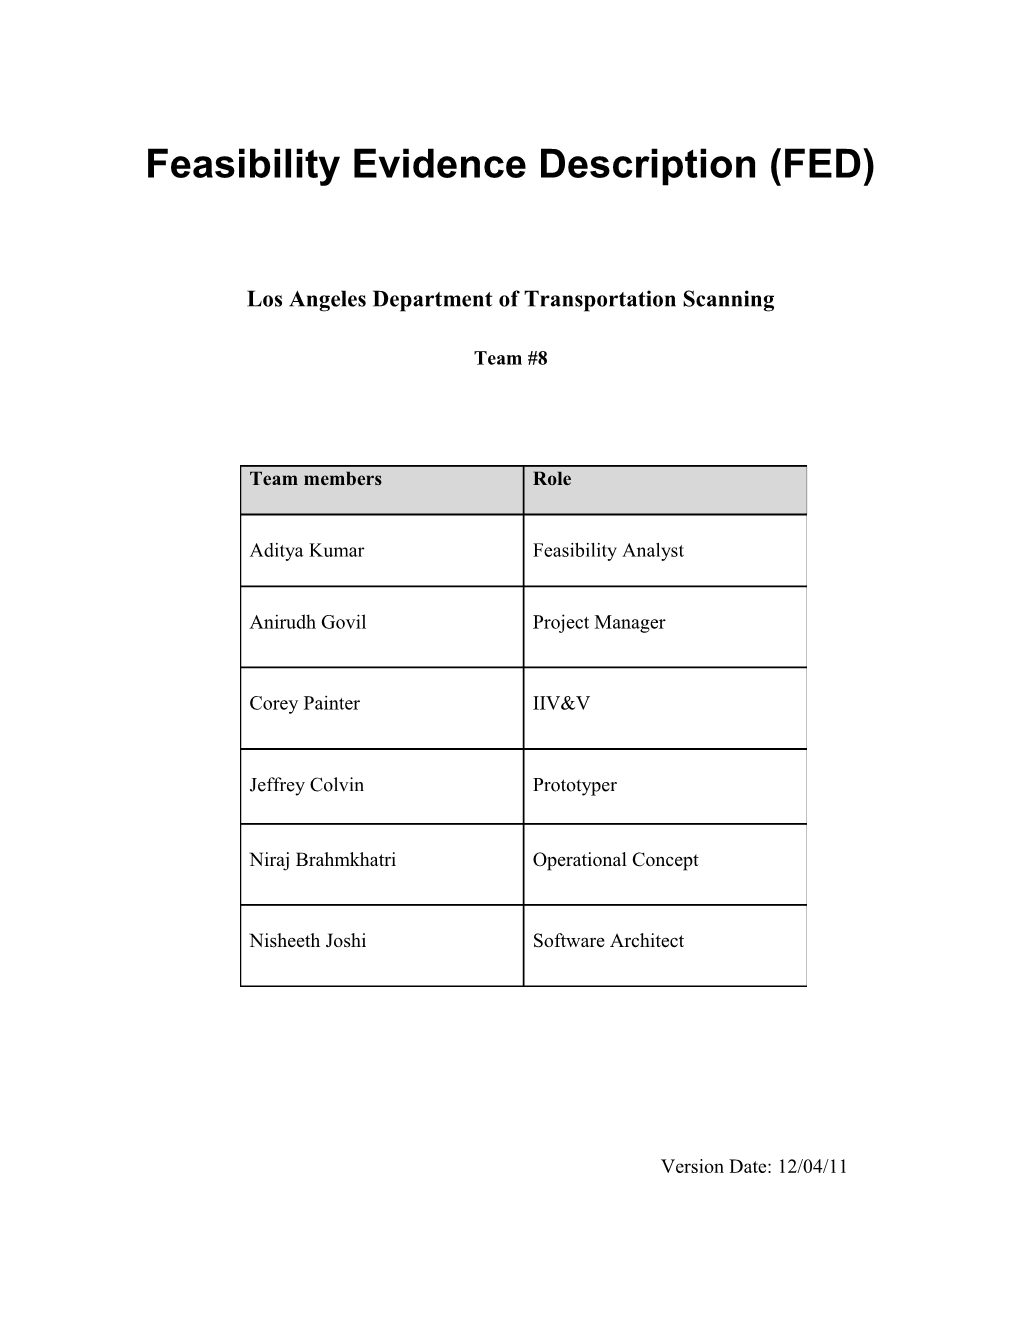 Feasibility Evidence Description (FED) for LADOT Scanningversion 4.1